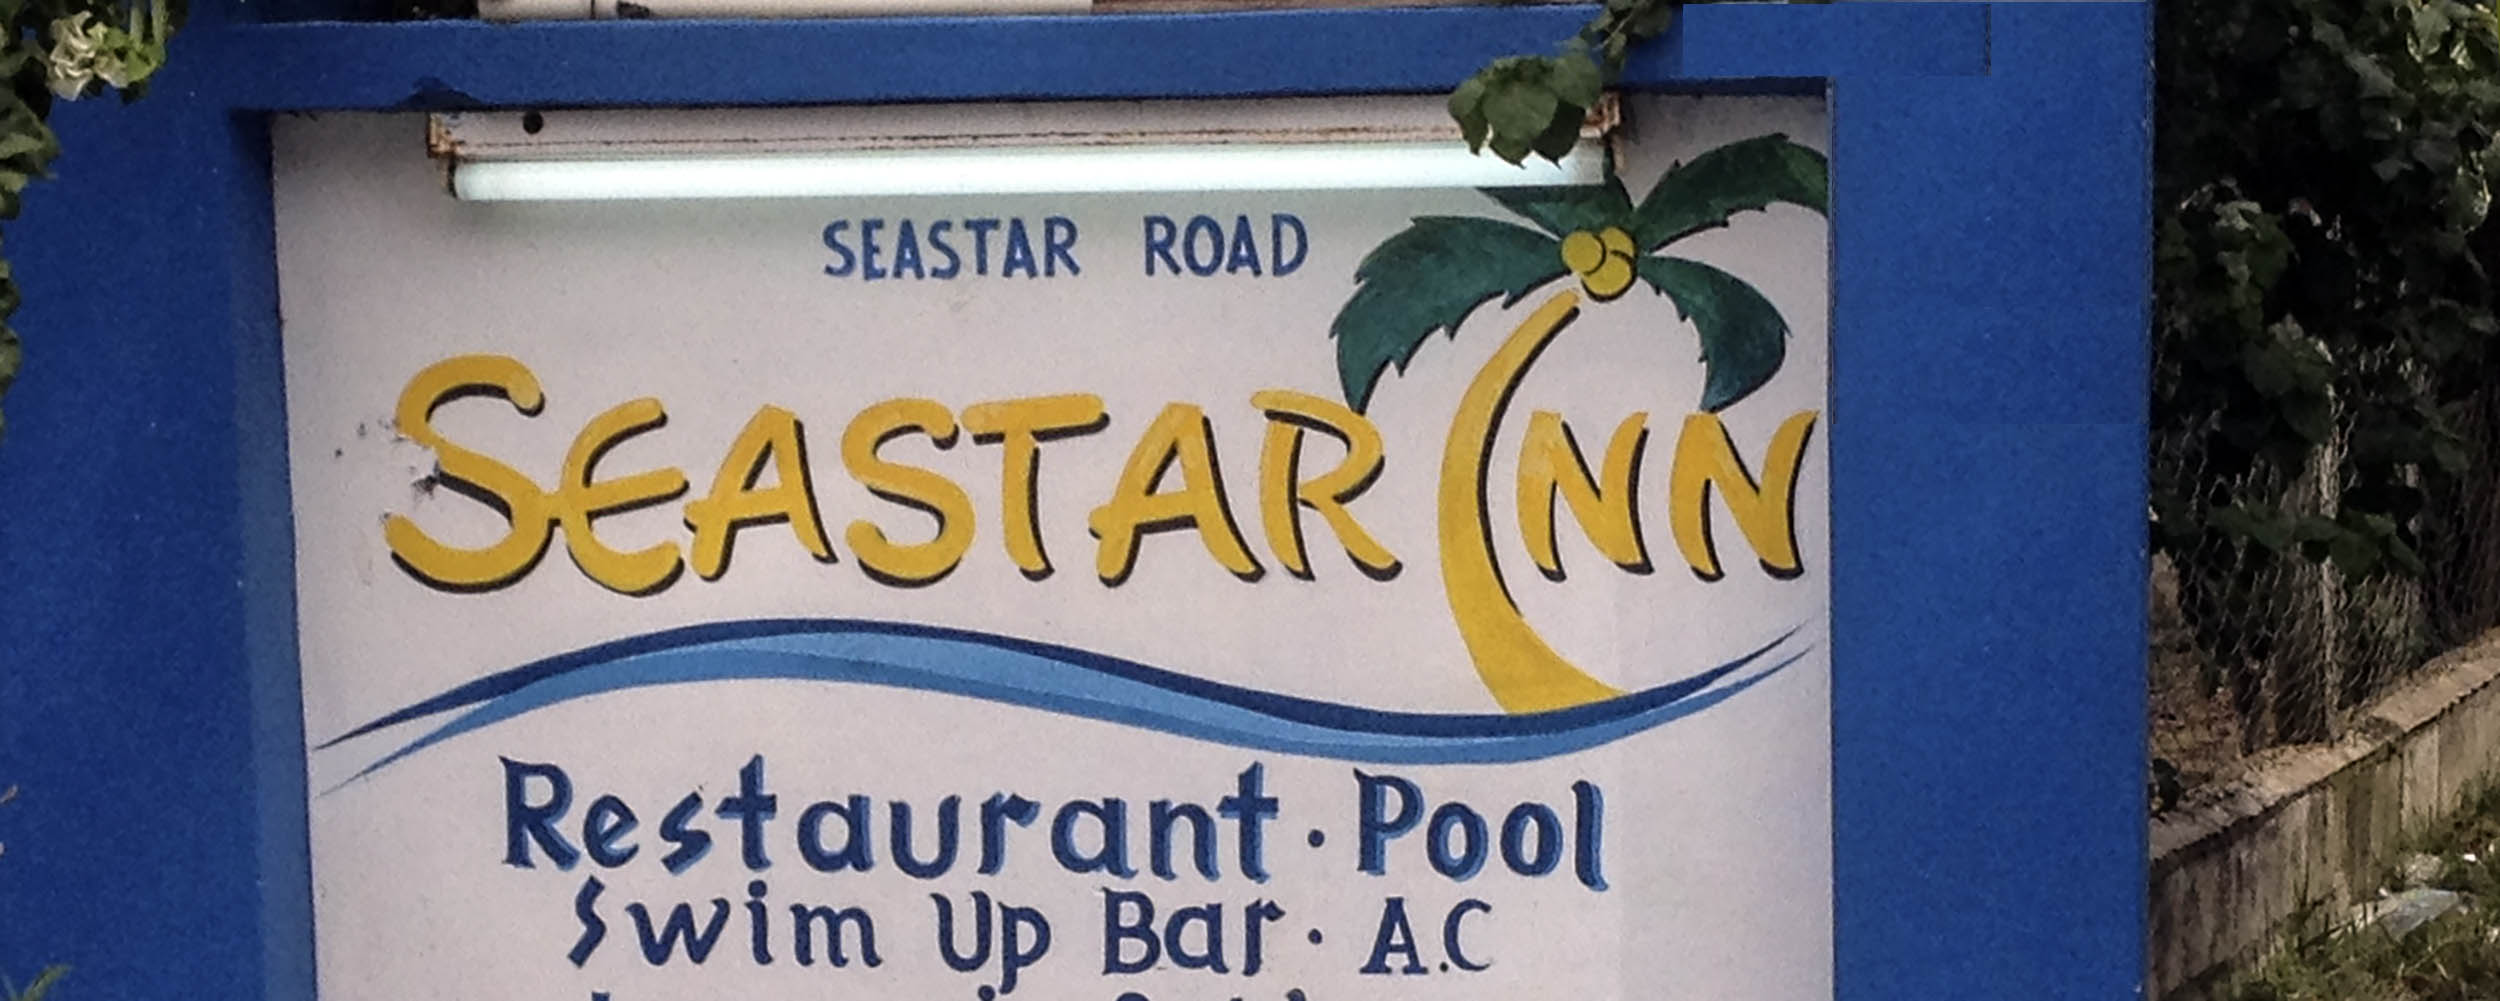 Seastar Inn - Negril Jamaica